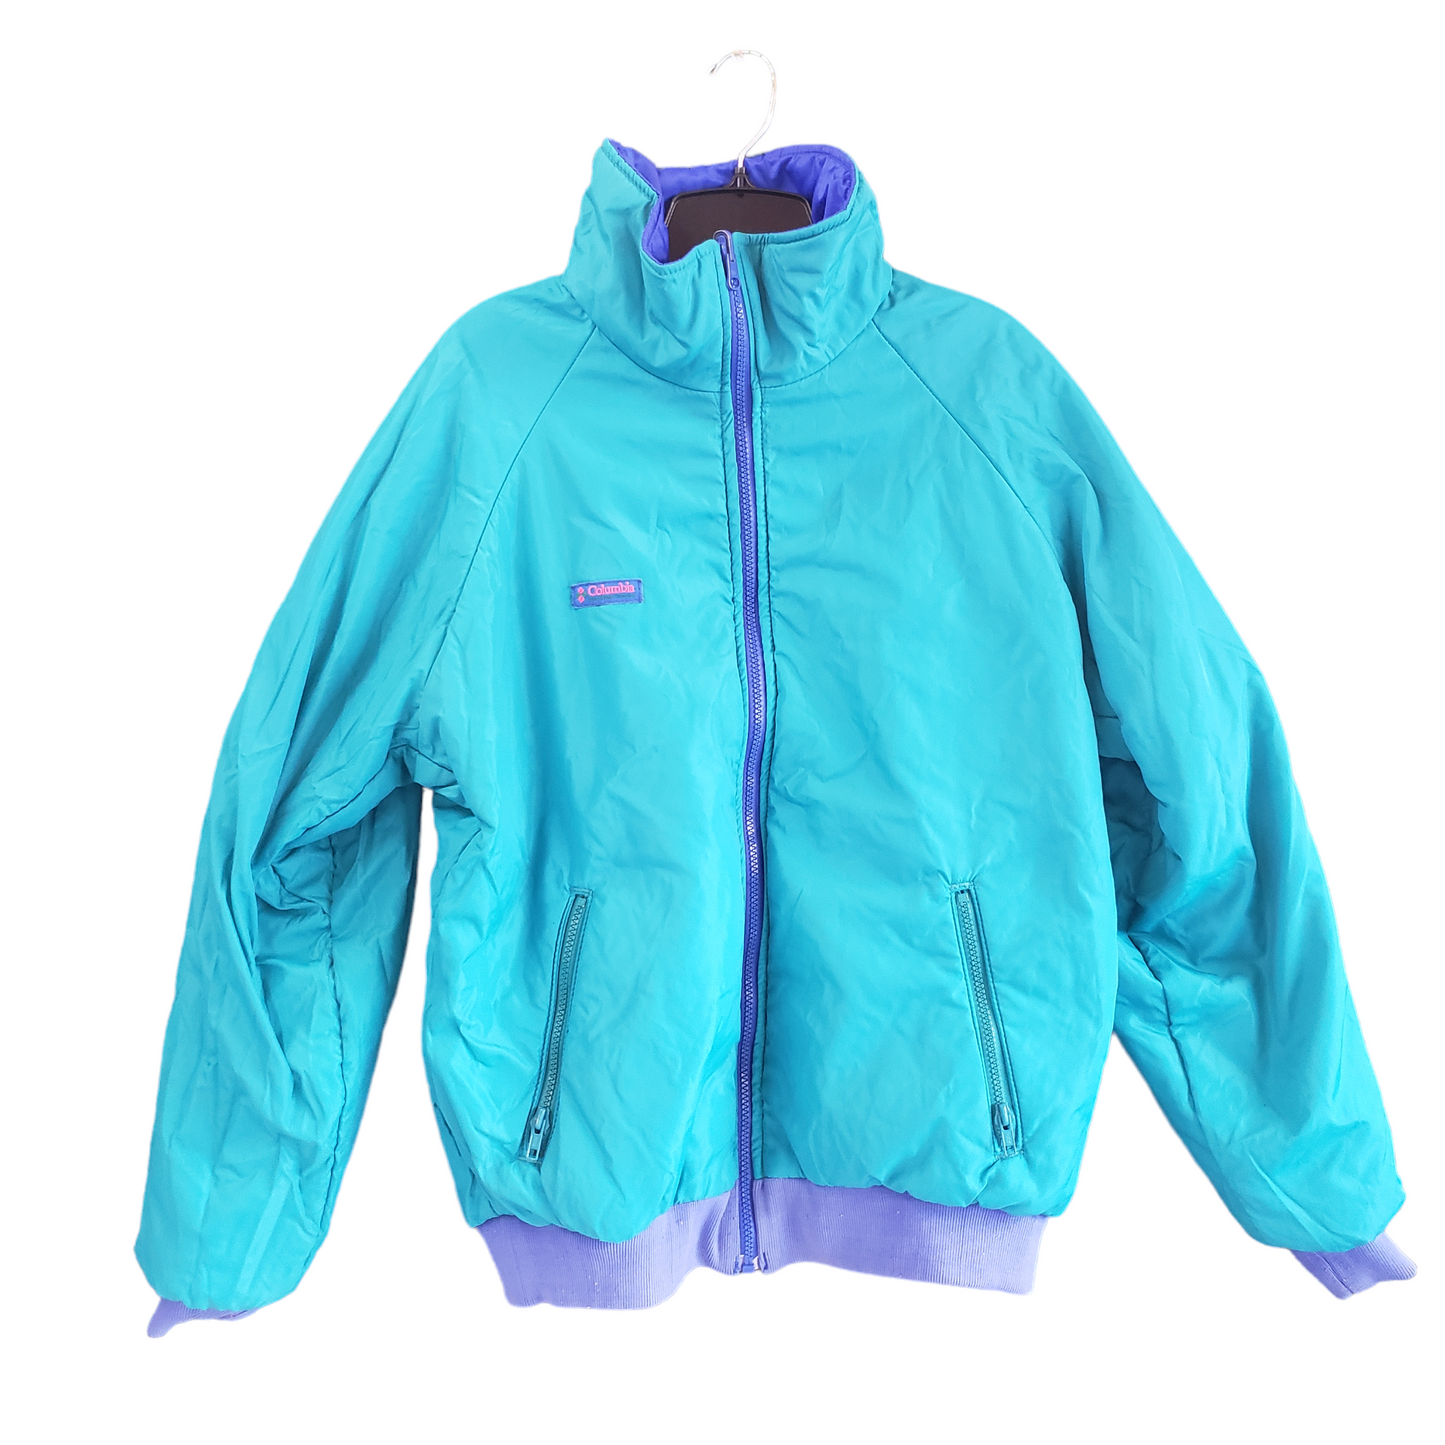 Vintage Columbia Sportswear Reversible Zip Up Men's Jacket Blue/Green - Size Medium